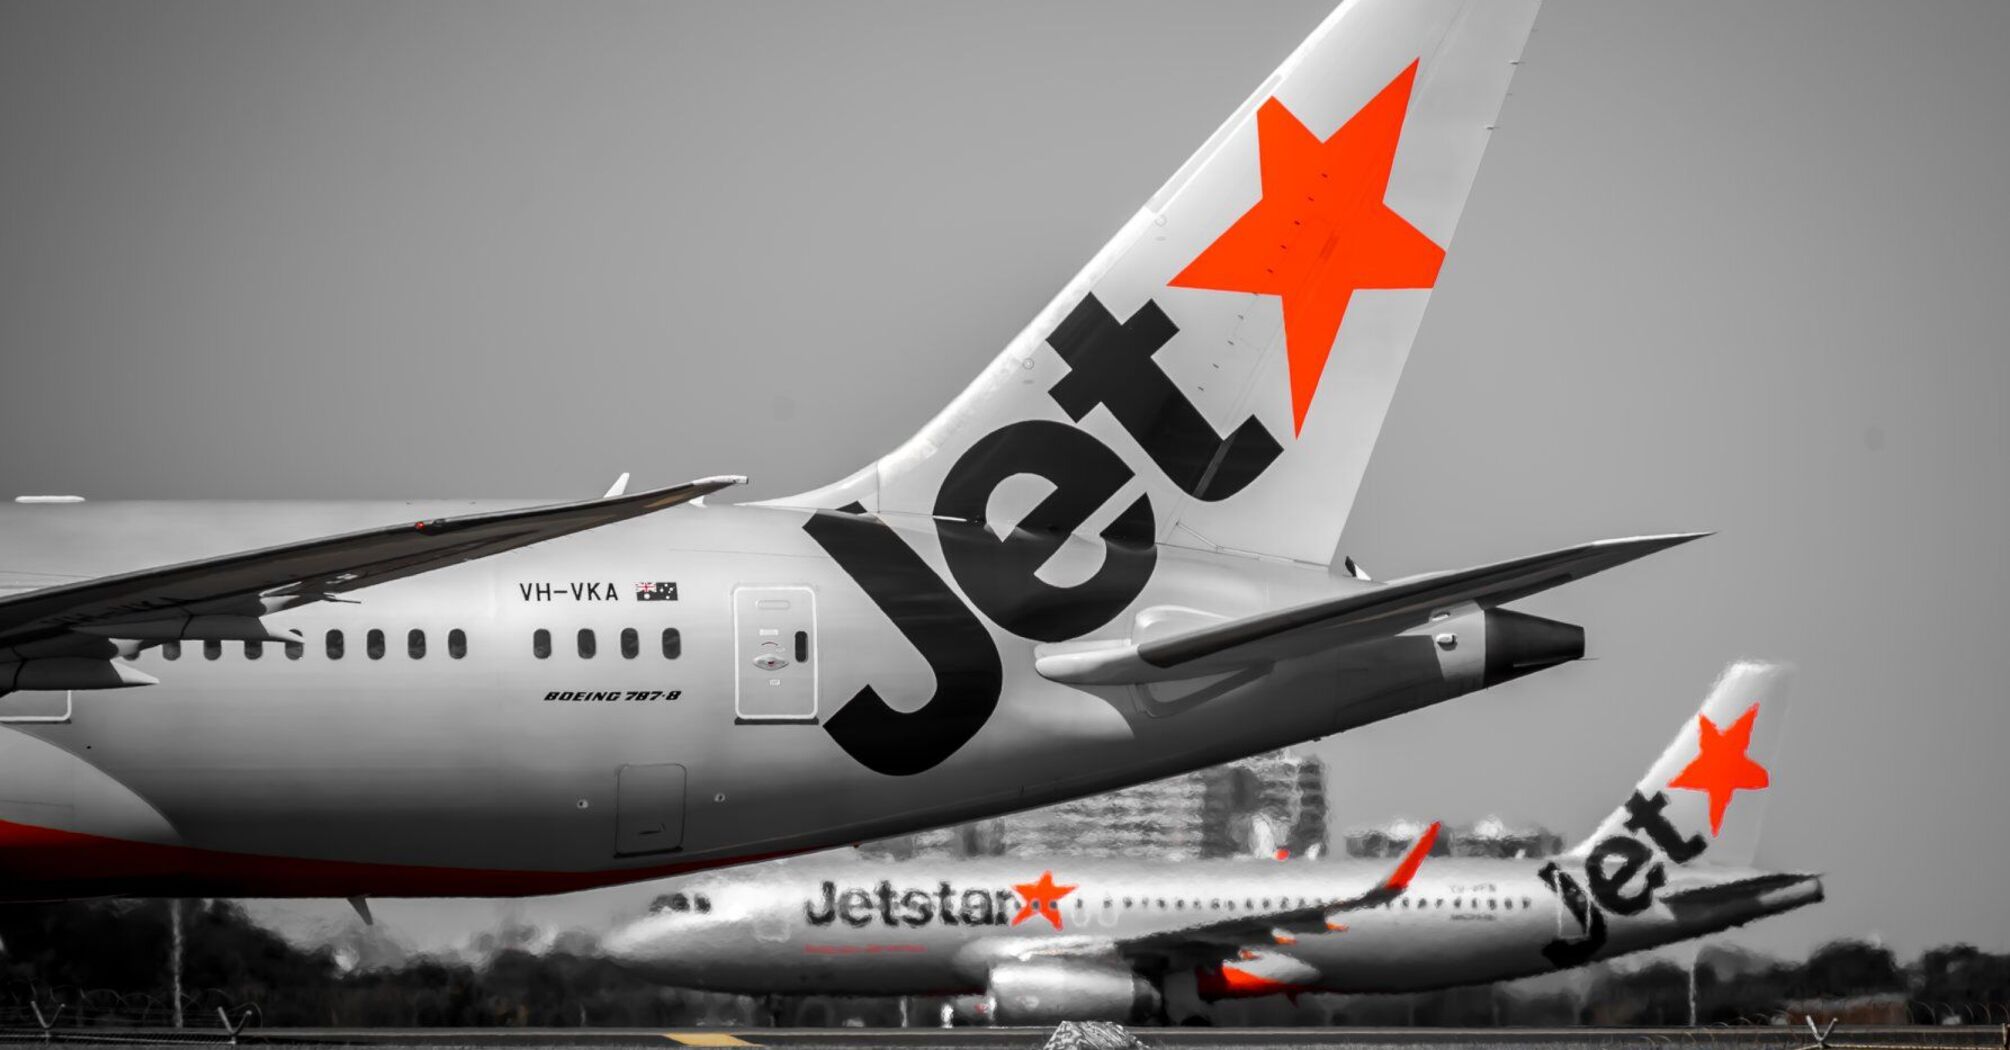 New Jetstar Uniform: The airline celebrates its 20th anniversary